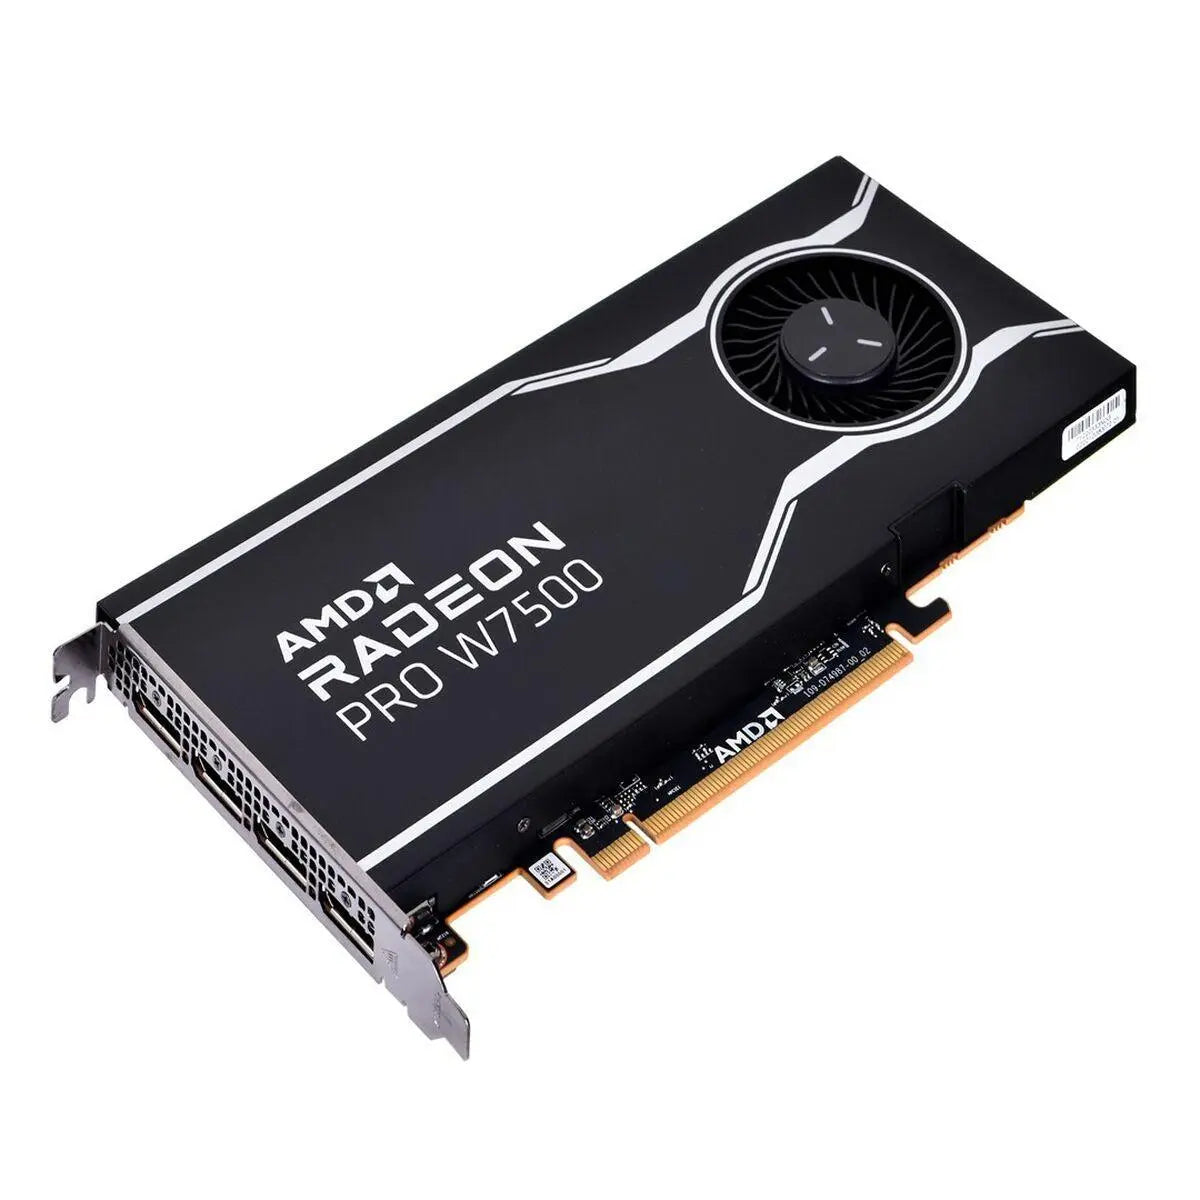 Graphics card AMD 100-300000078 - IGSI Europe Ltd